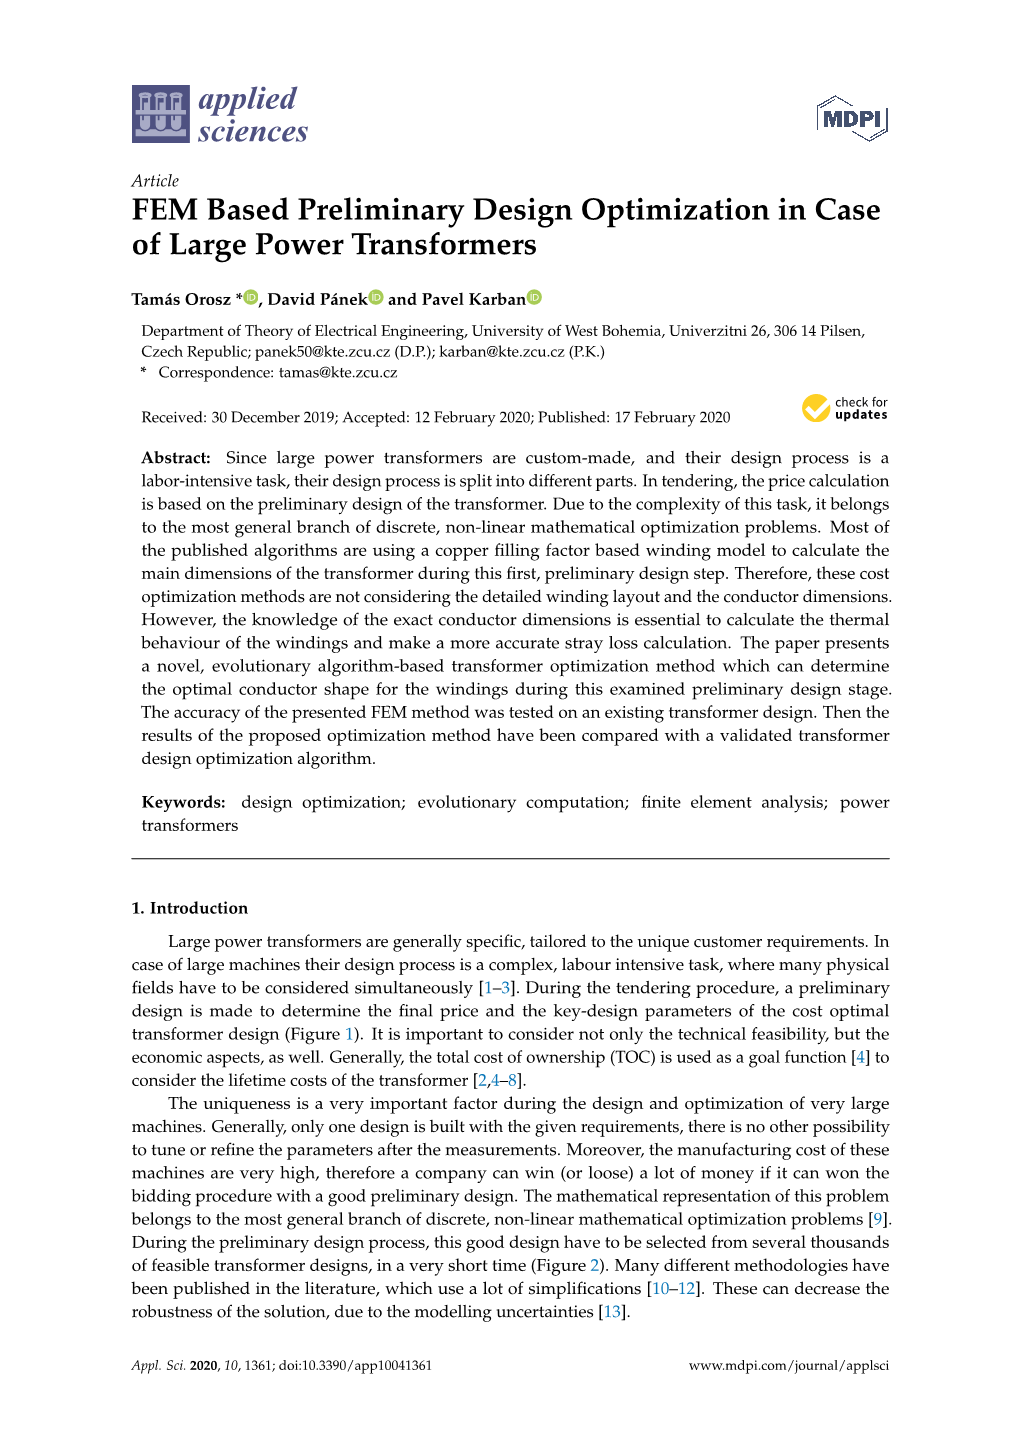 FEM Based Preliminary Design Optimization in Case of Large Power Transformers